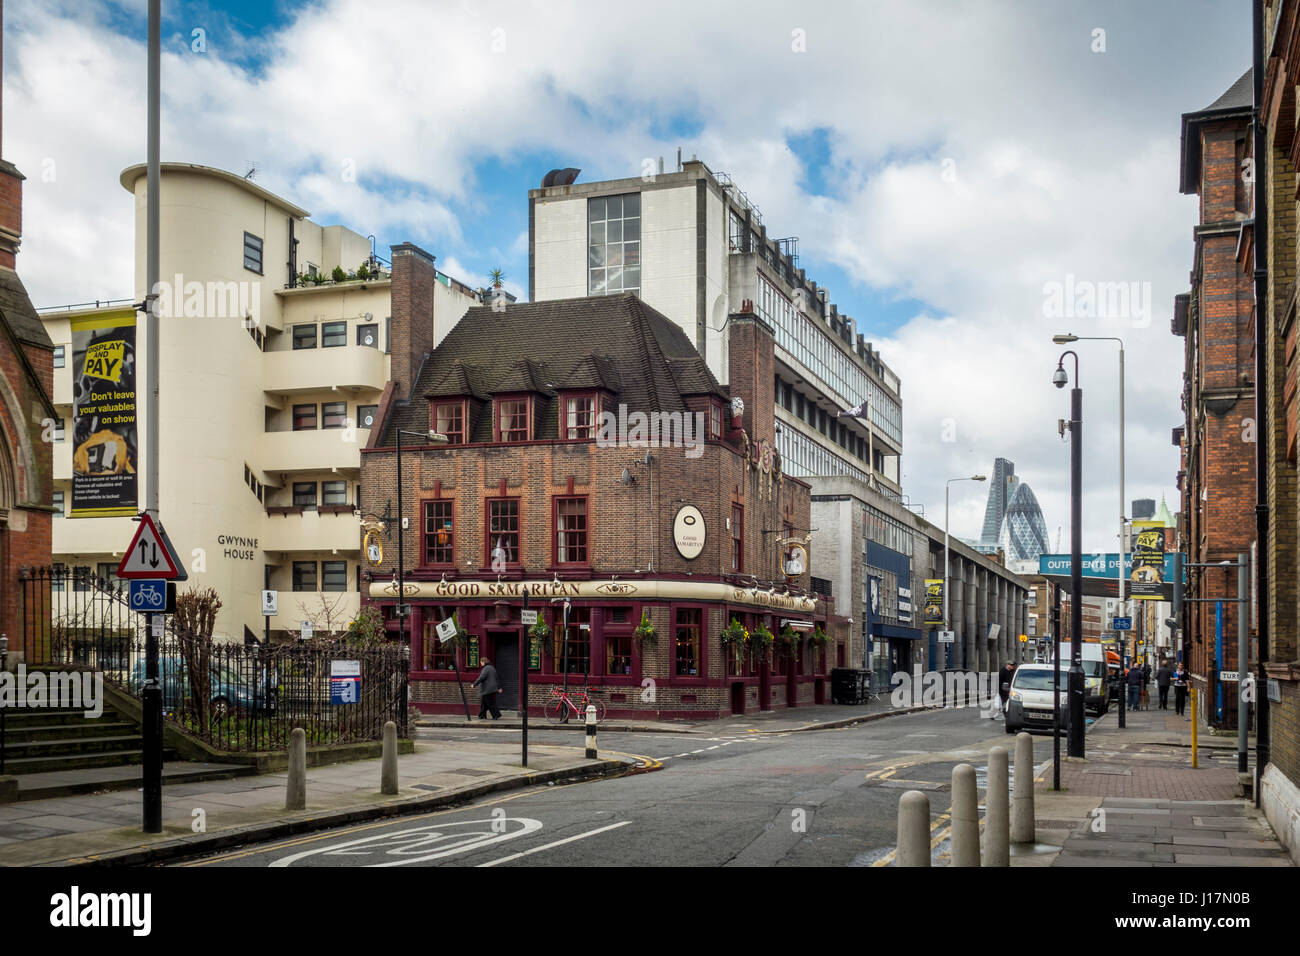 Buen Samaritano pub Public House, Turner Street, Whitechapel, Londres, Reino Unido. Foto de stock